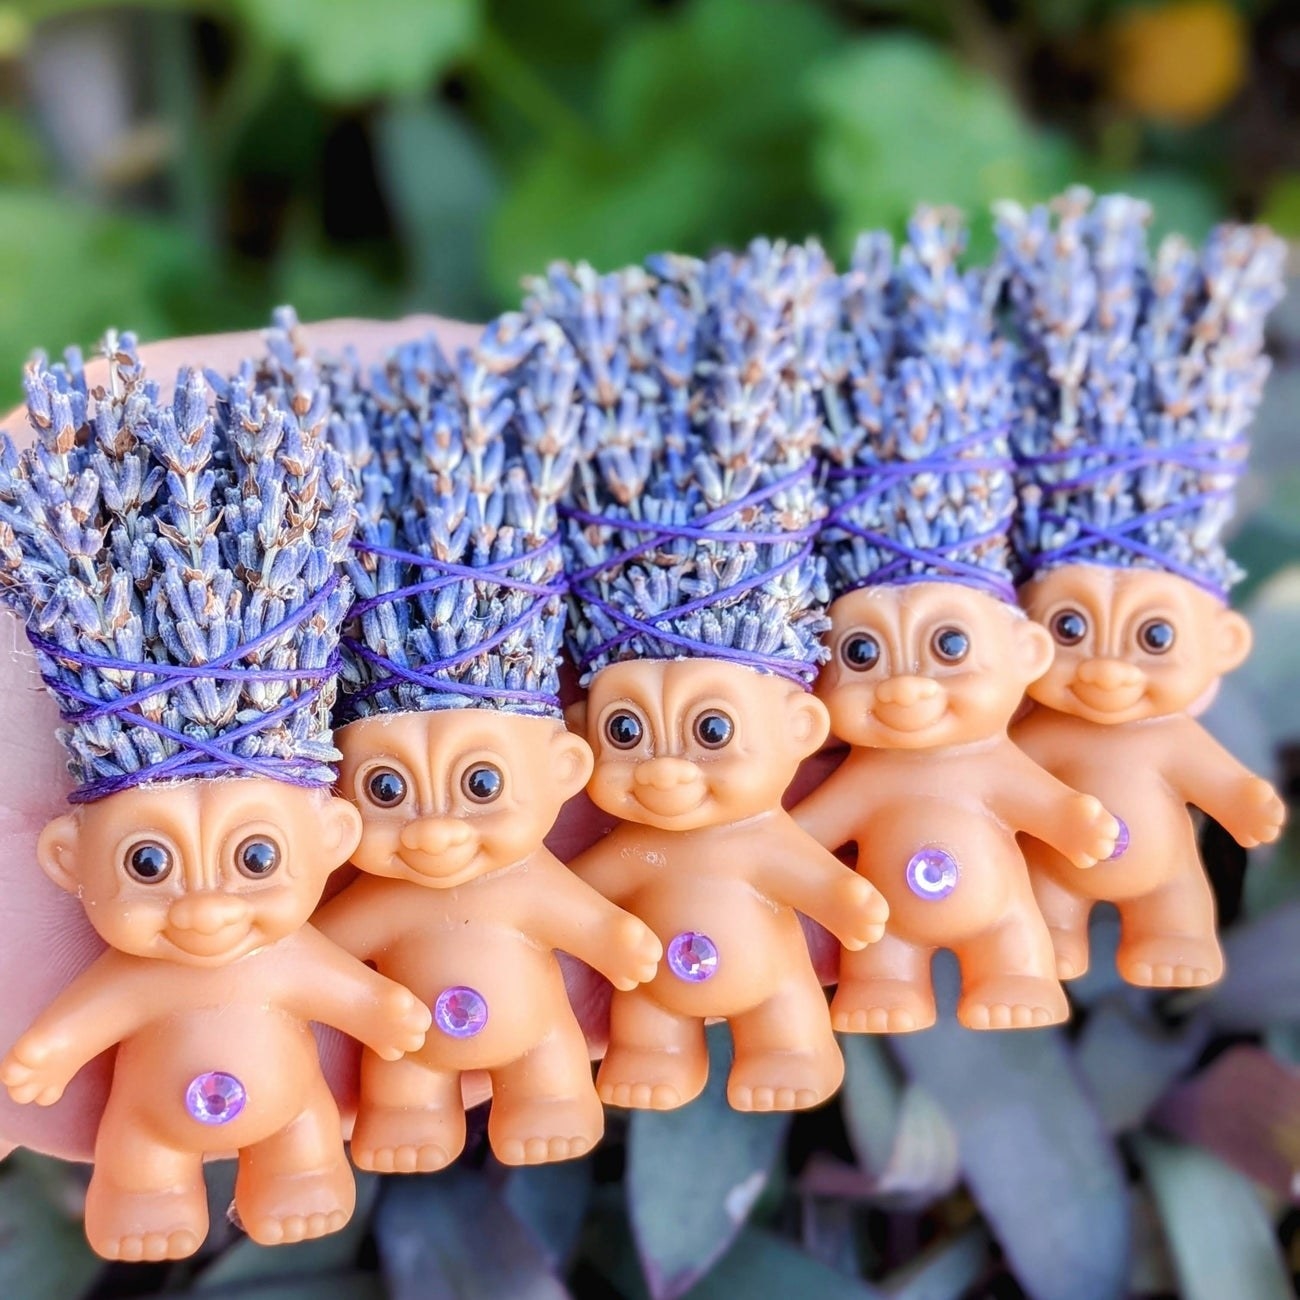 A bundle of the lavender troll dolls